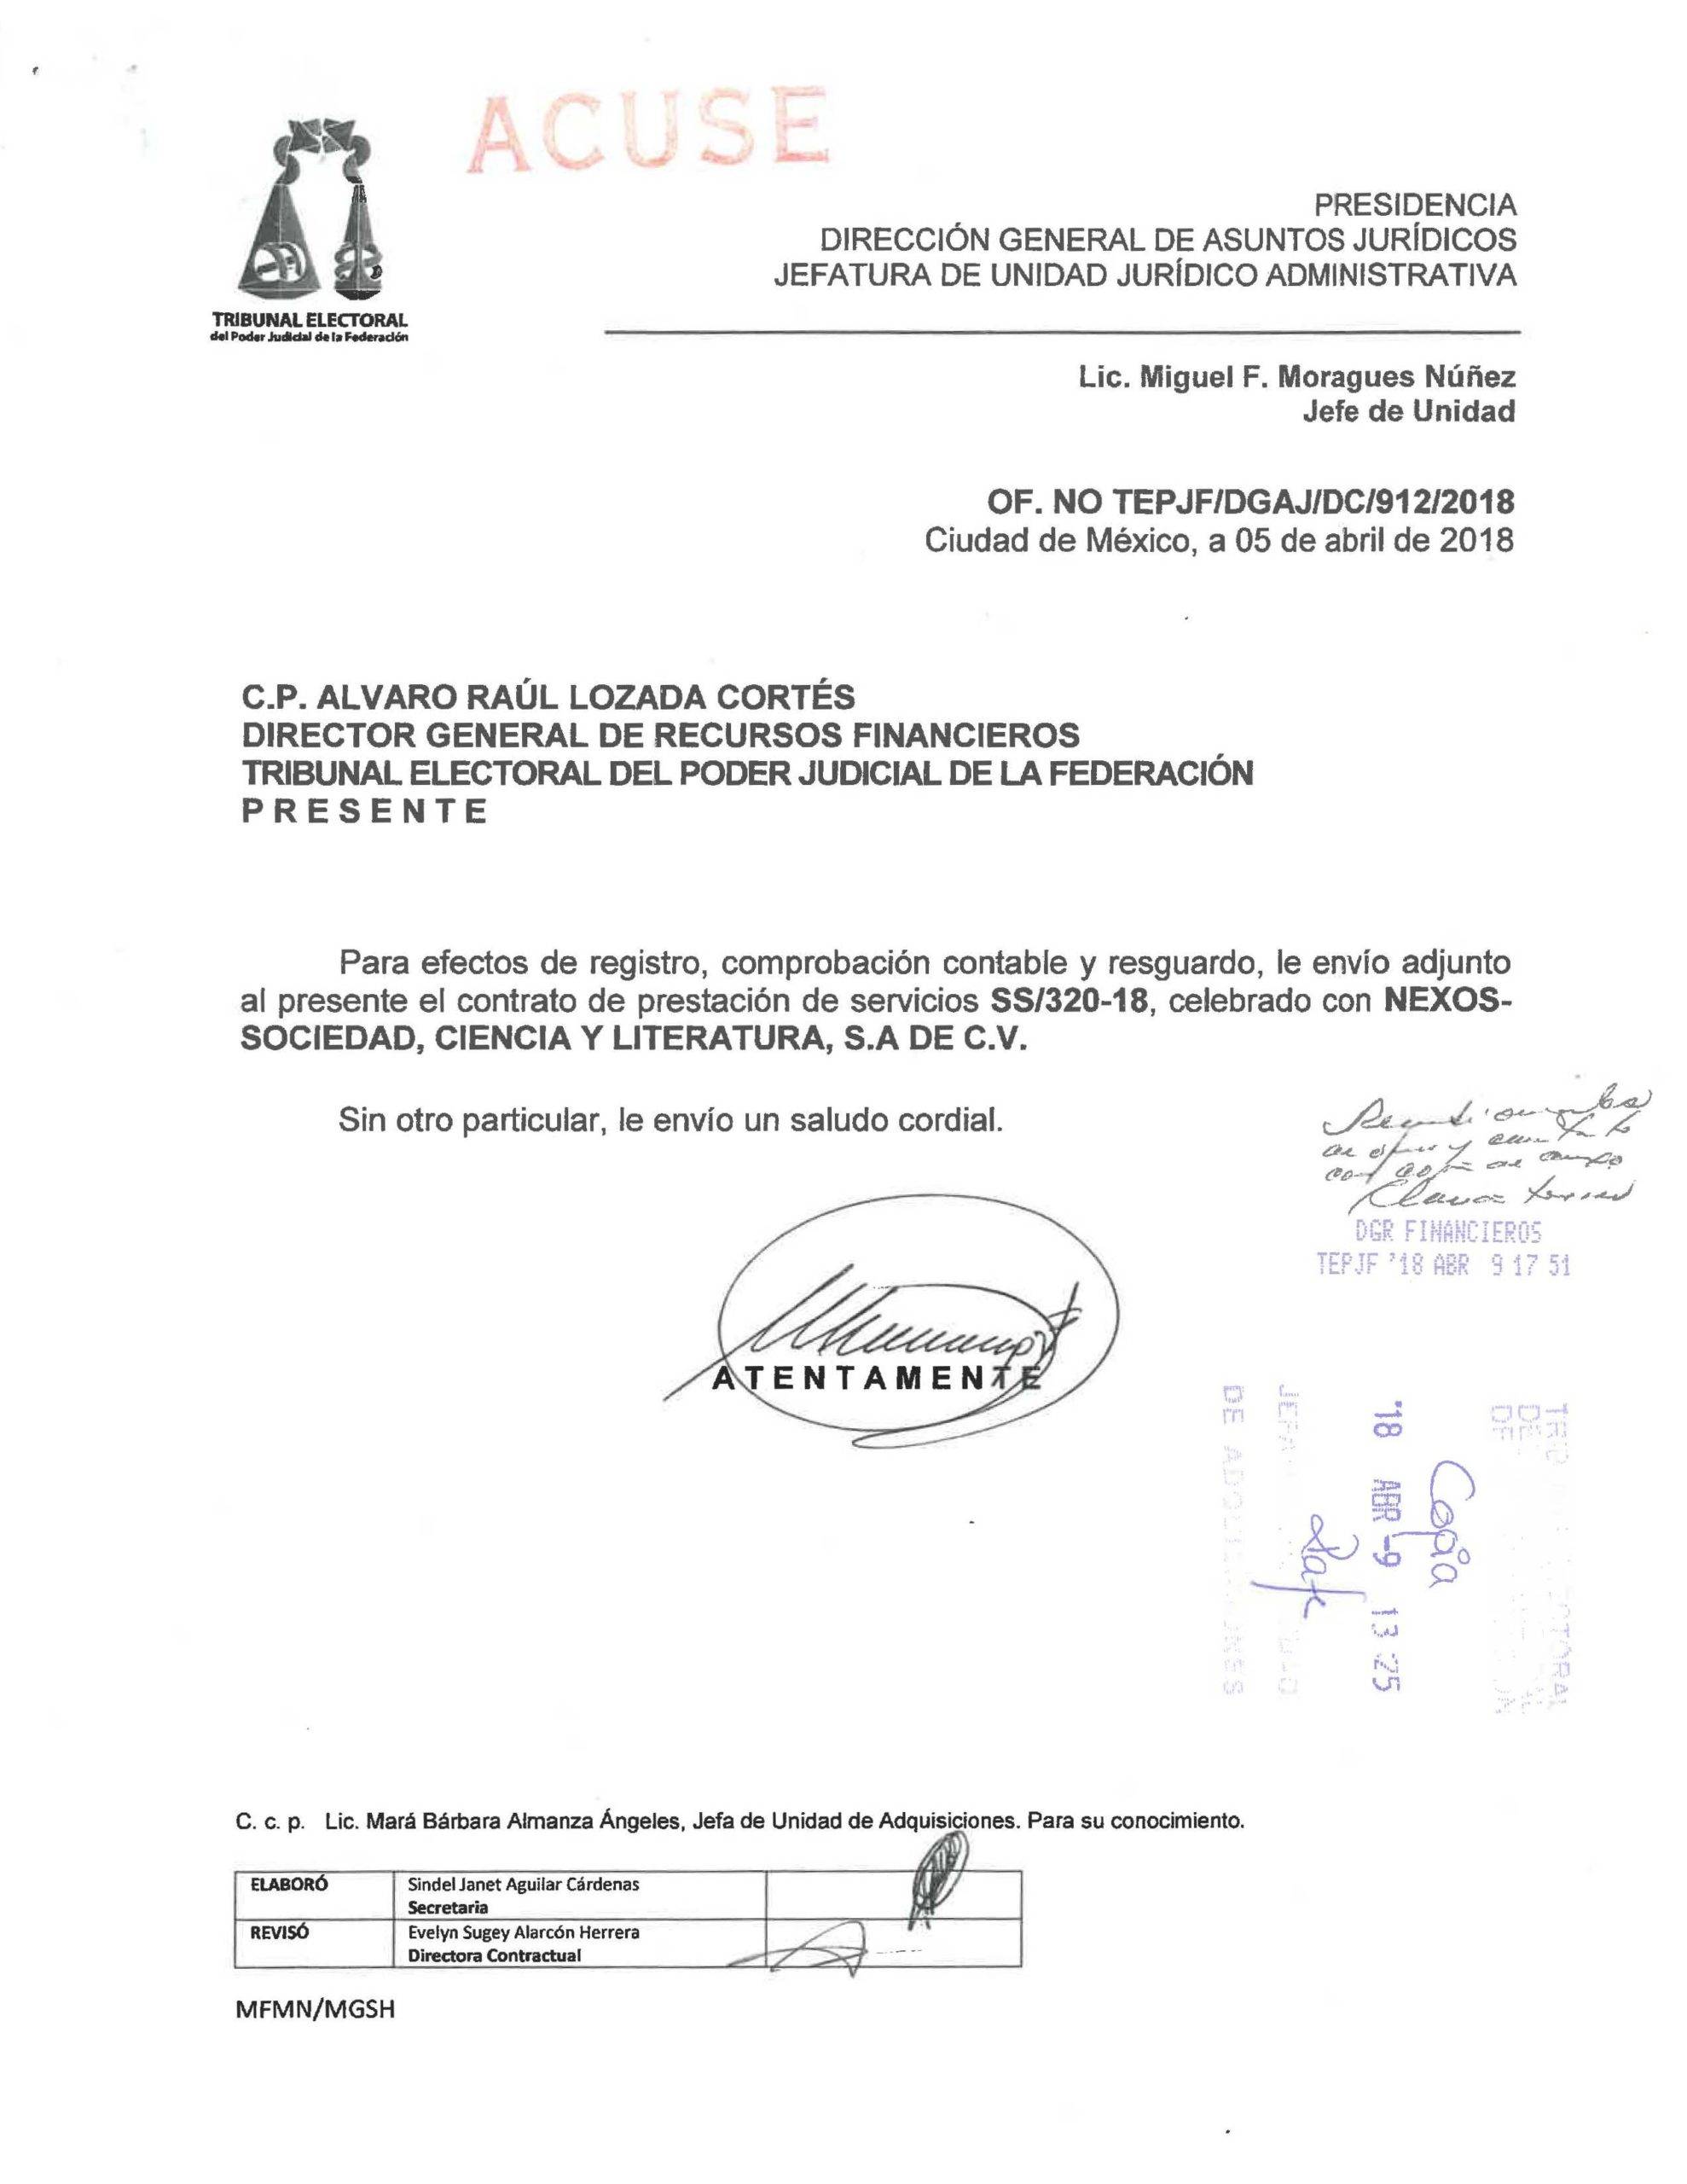 INE pagó 2 mdp a empresas de Aguilar Camín y Krauze 